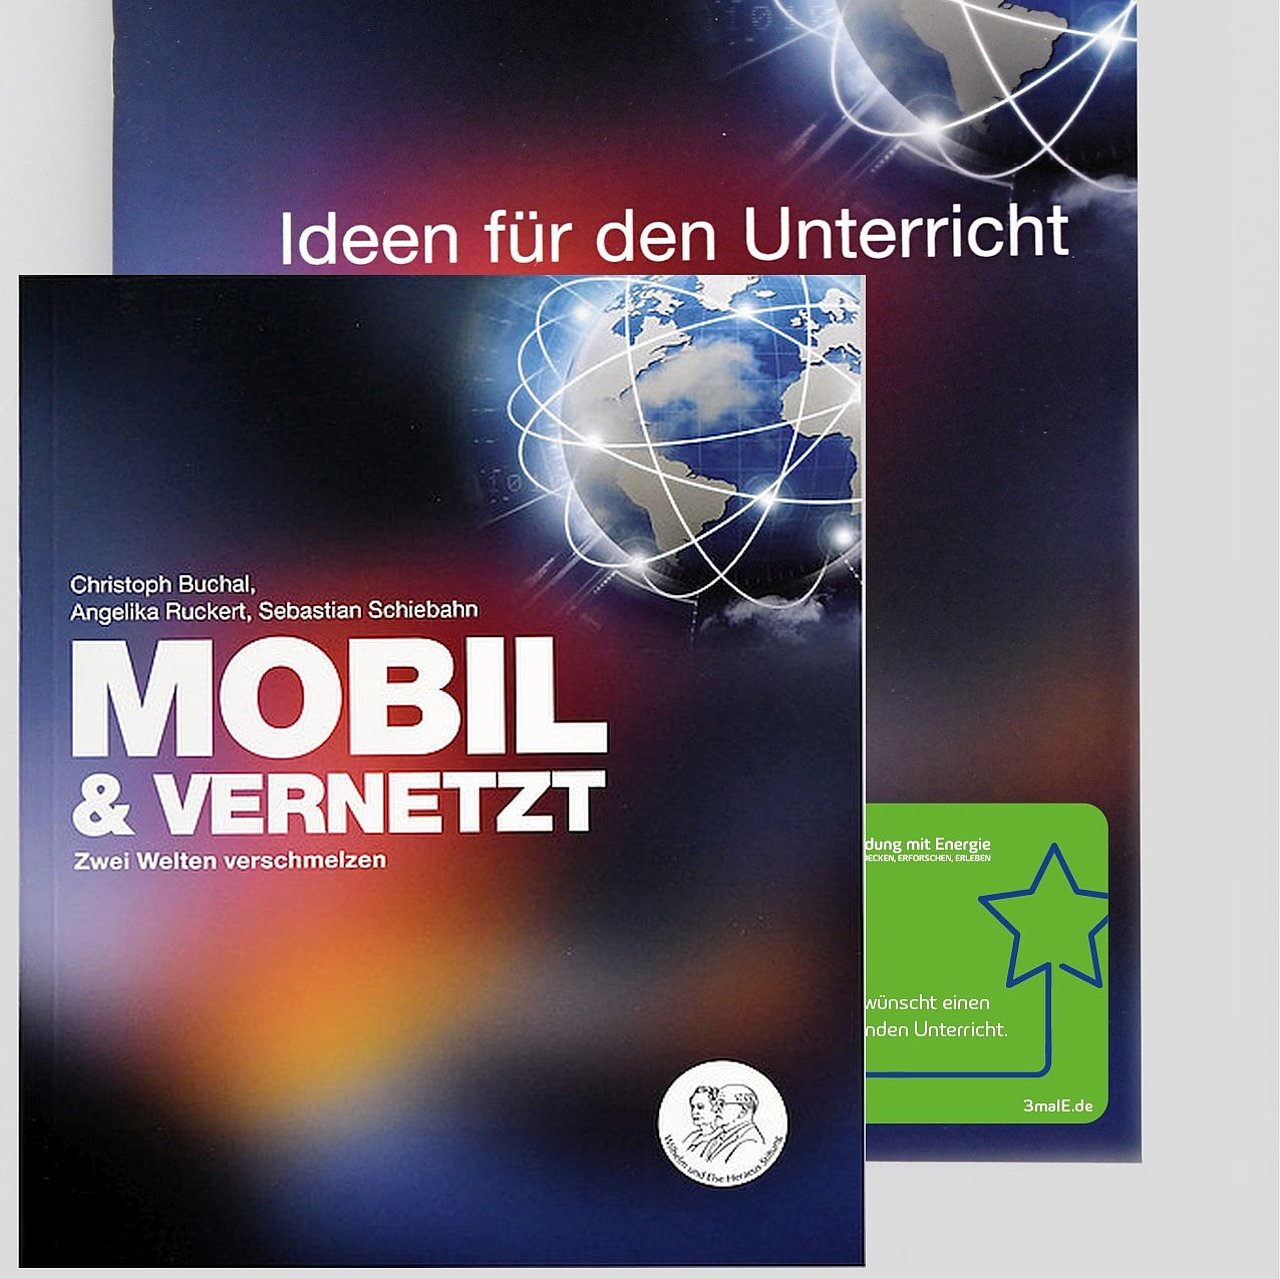 Paket: Sachbuch & Ideenheft „Mobil & vernetzt“